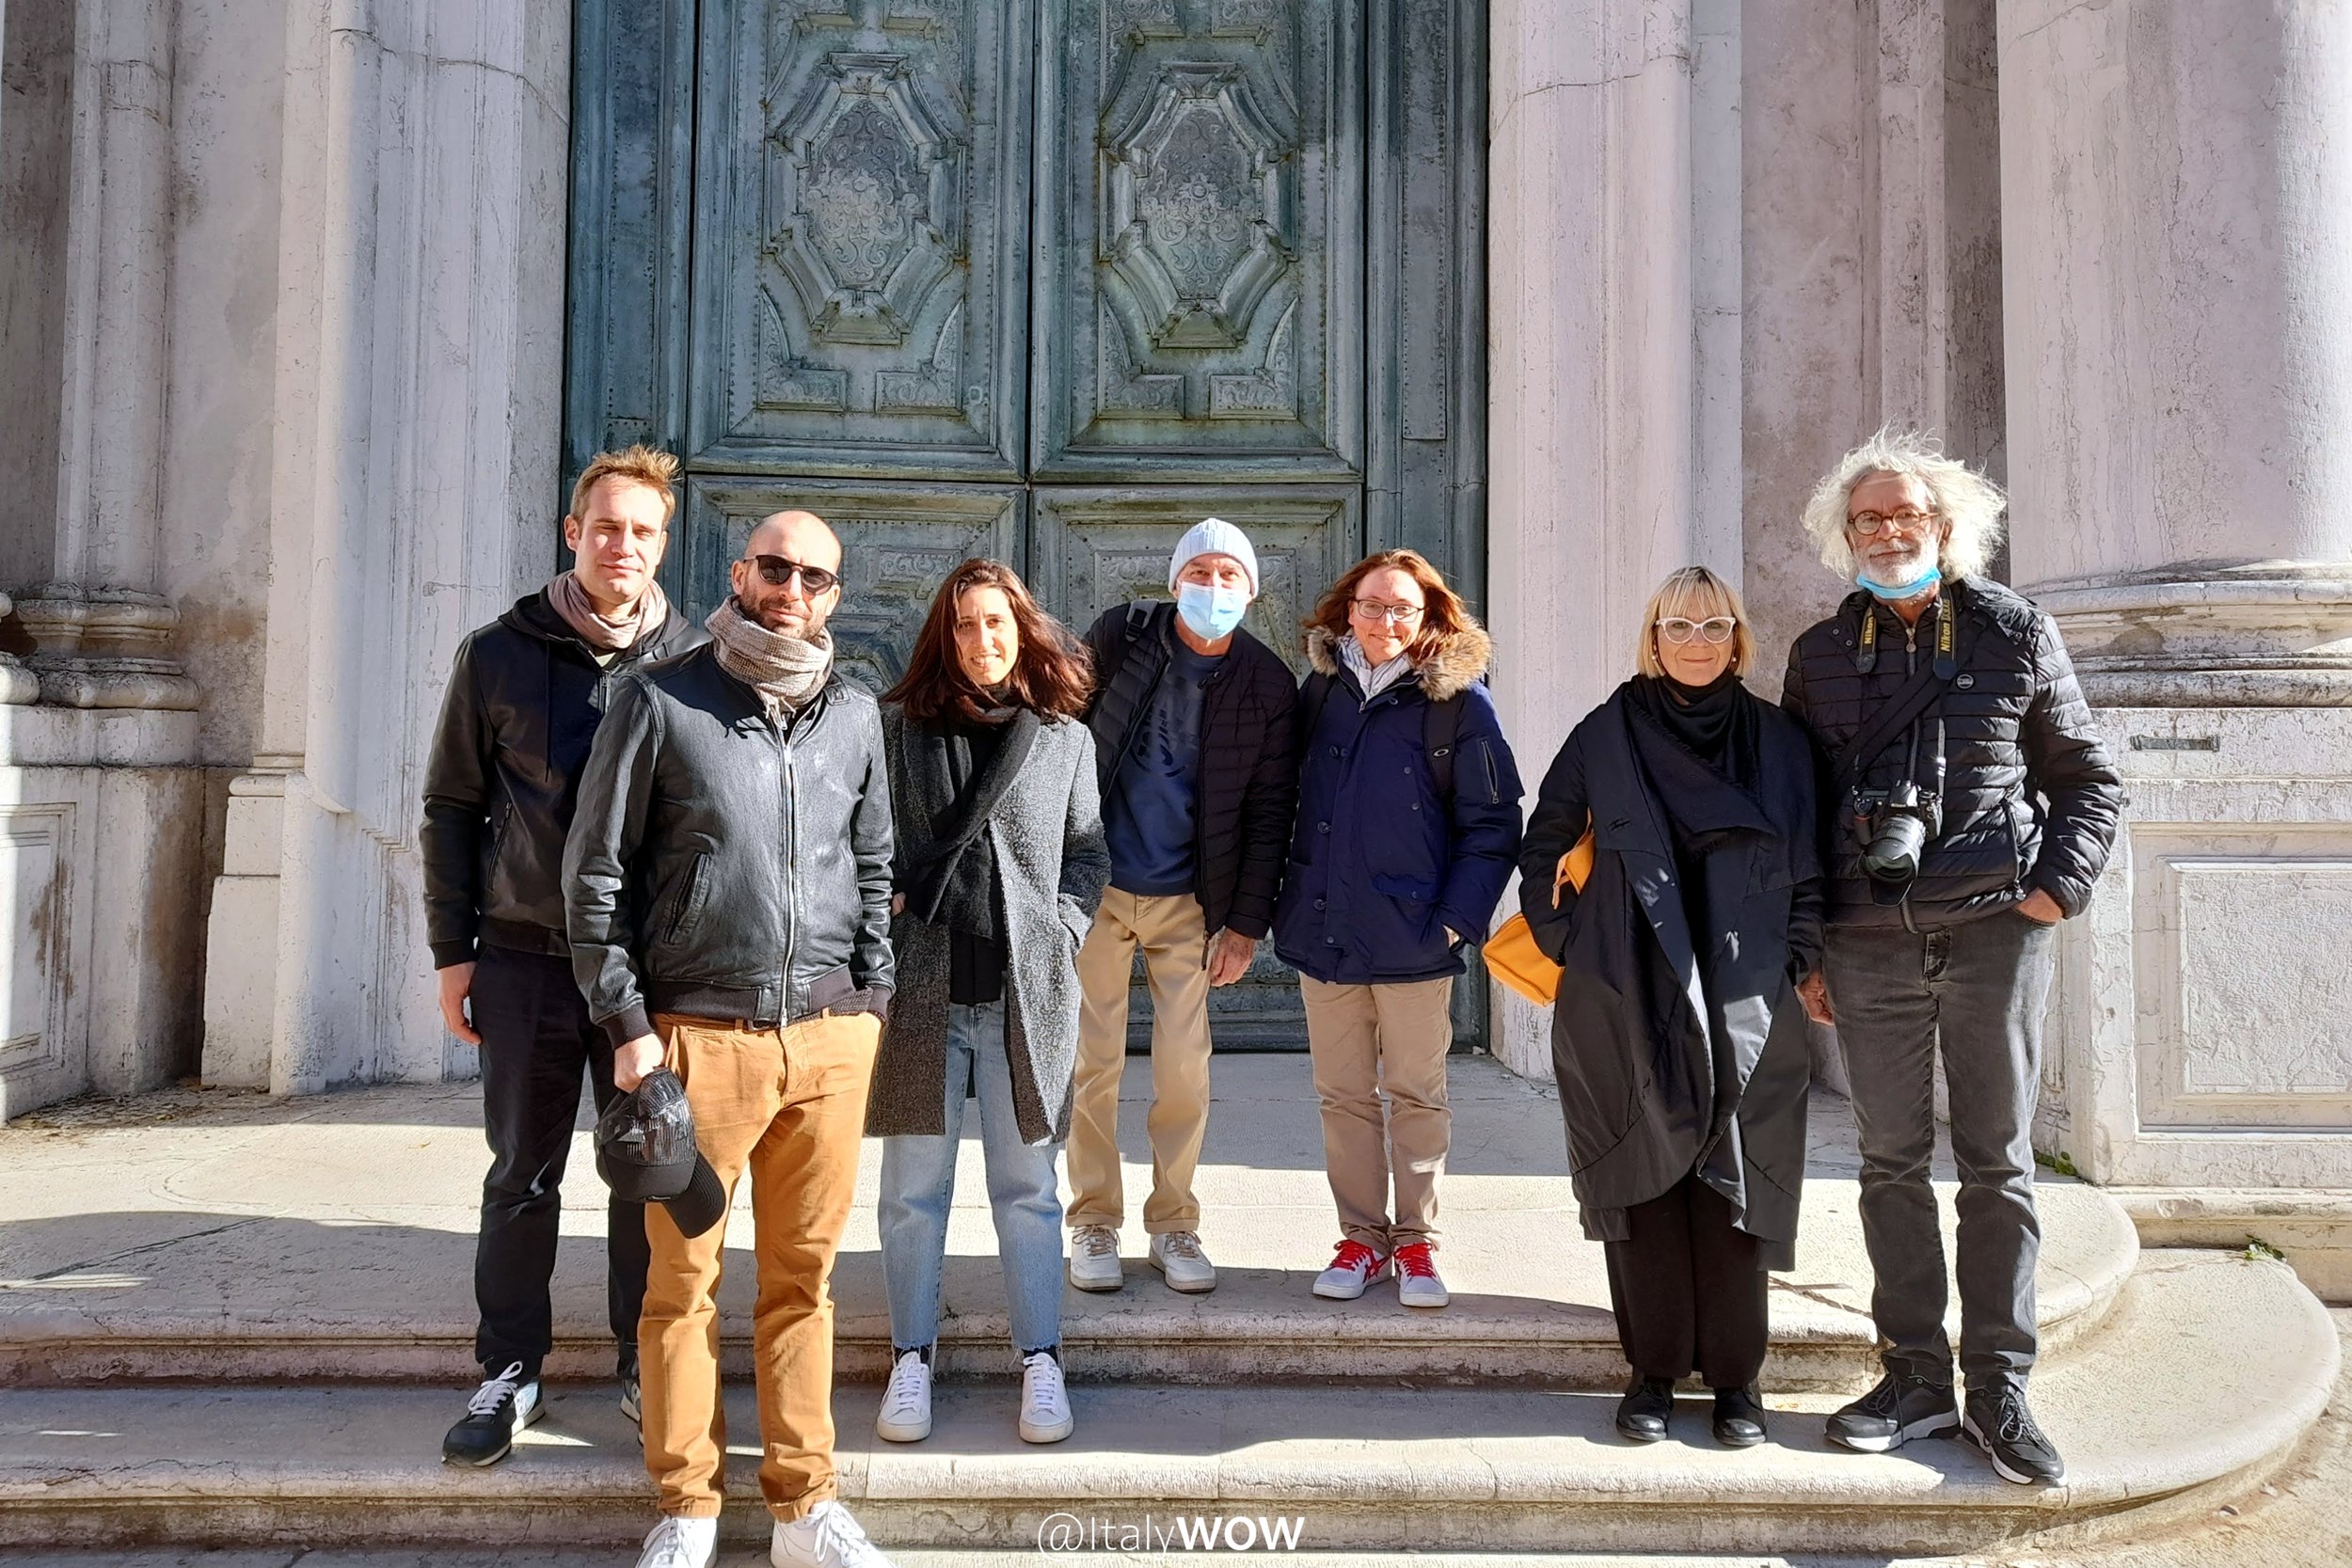 venezia-tour-3t-wow-experience-guided-tour-gruppo.jpg